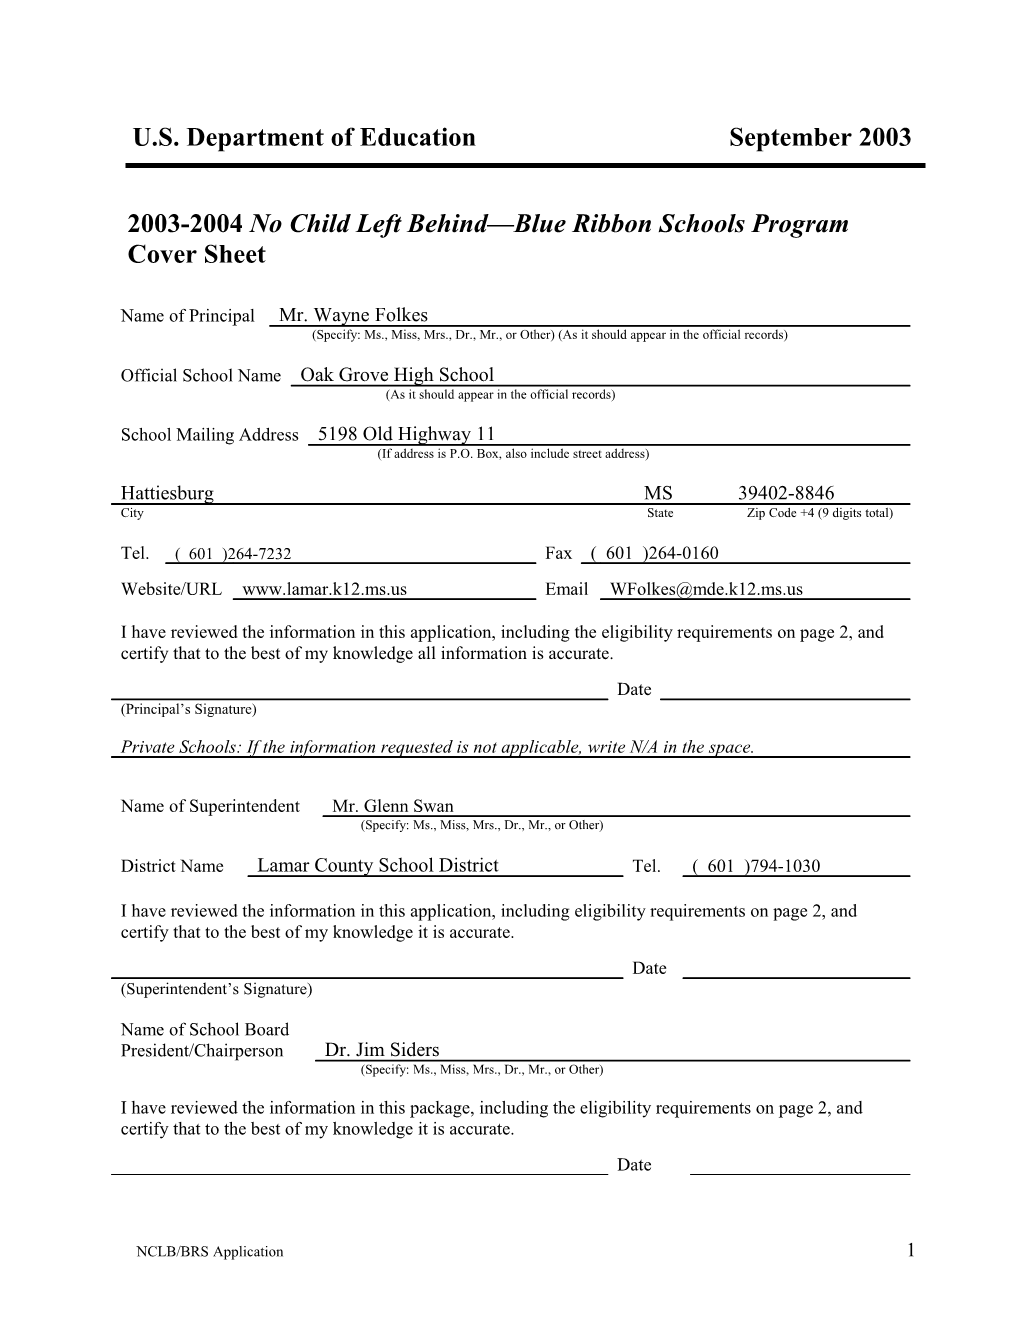 Oak Grove High School 2004 No Child Left Behind-Blue Ribbon School Application (Msword)